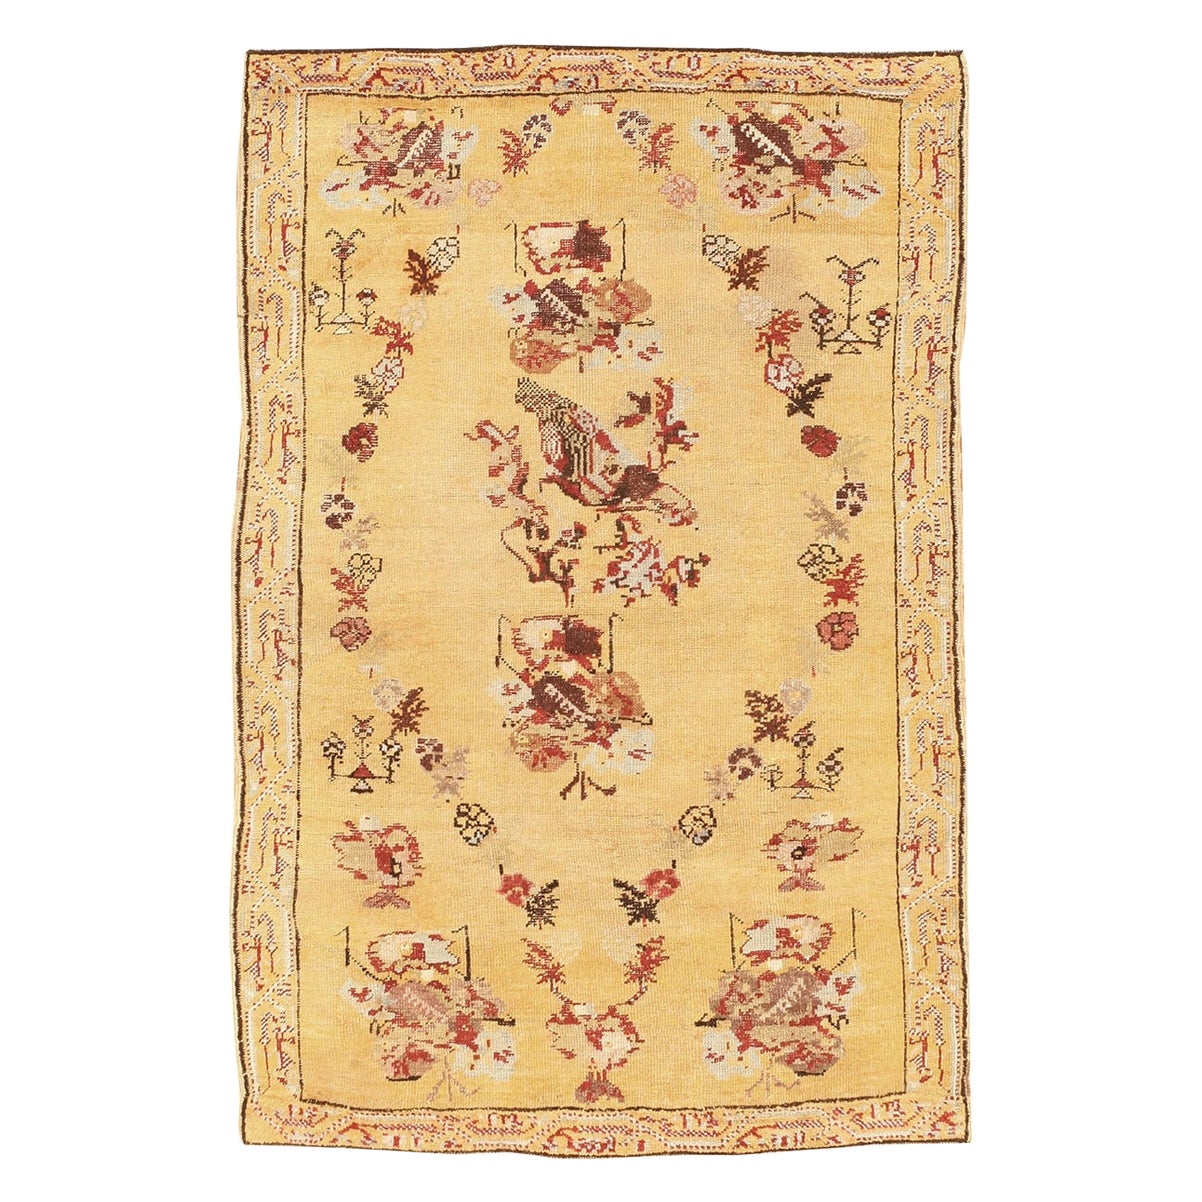 Antique Turkish Ghiordes Carpet. Size: 3 ft 4 in x 5 ft For Sale